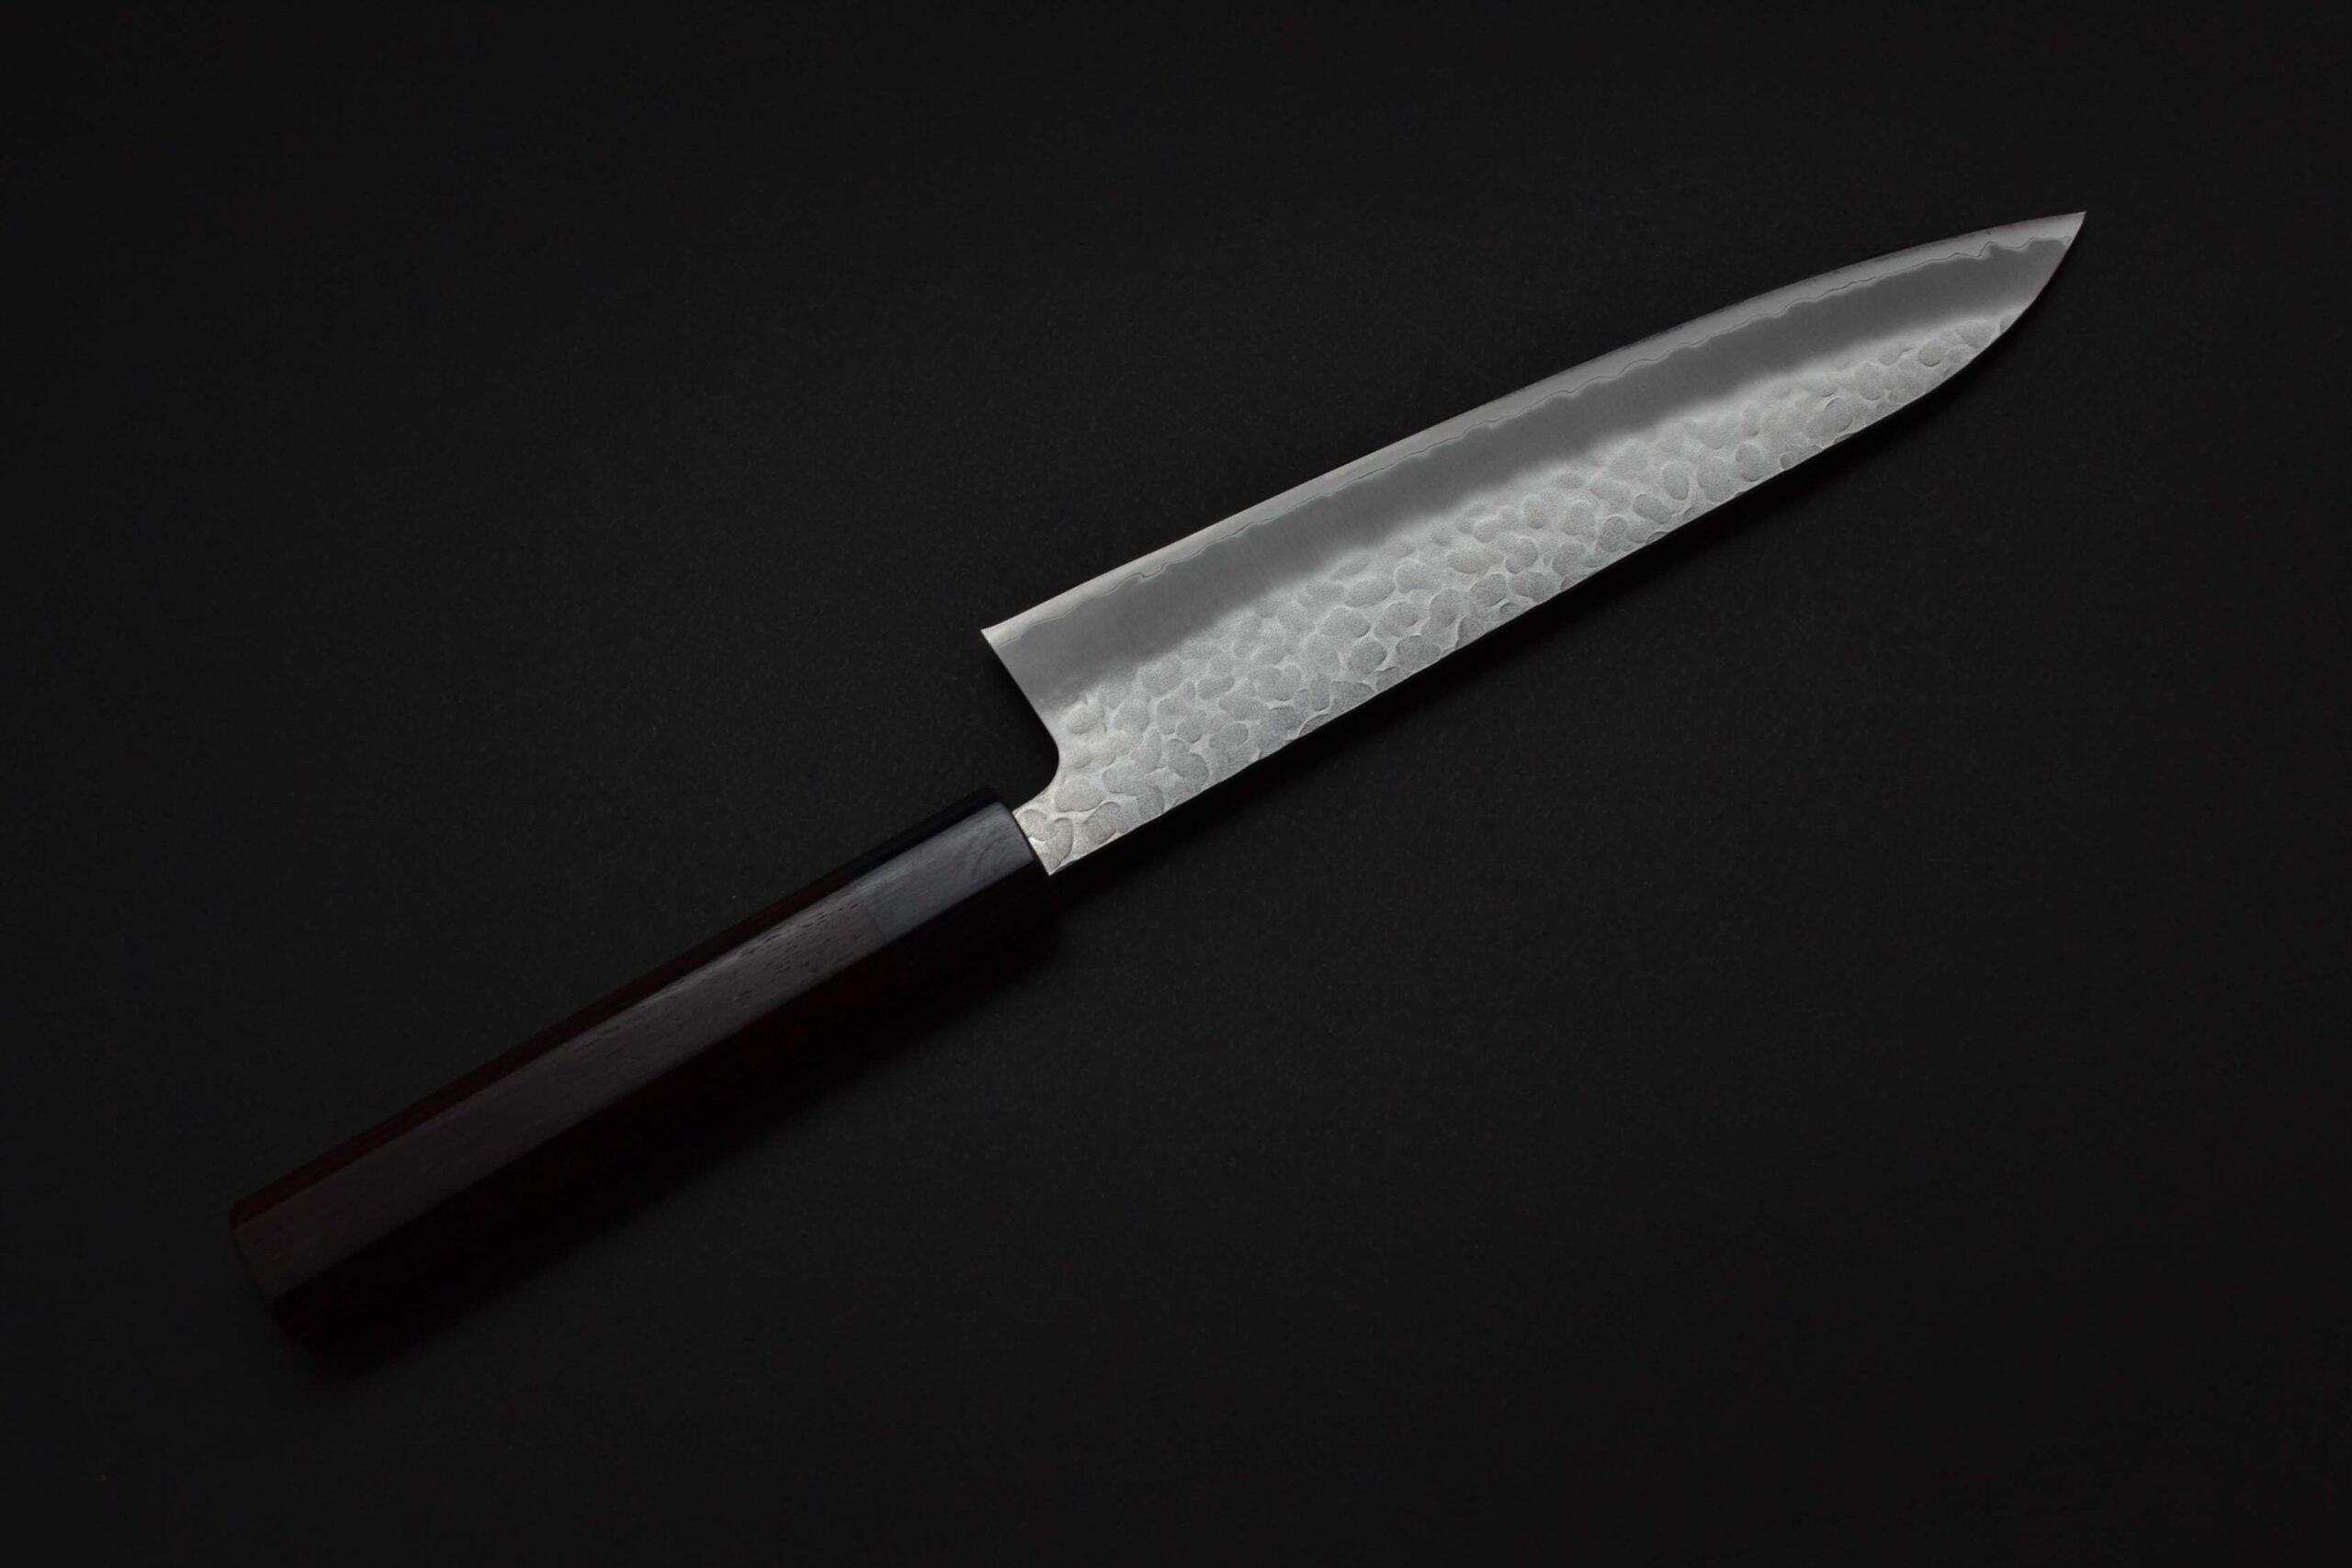 Hokiyama Bokusui Swirl Gyuto 210mm – The Sharp Cook